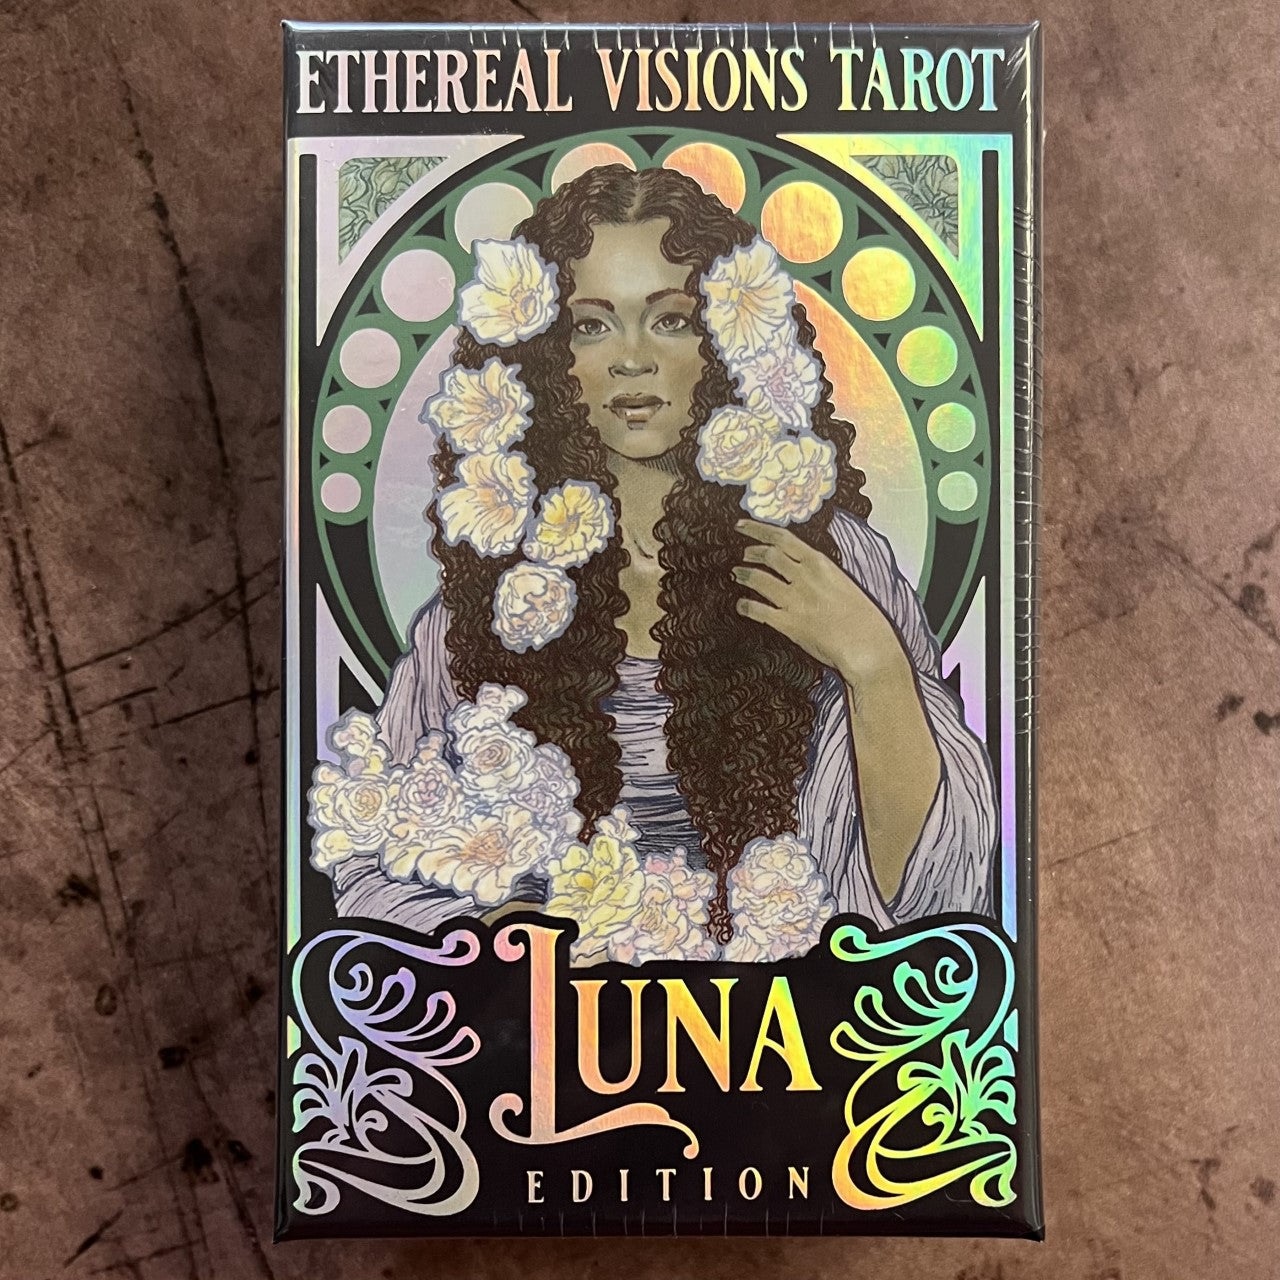 Ethereal Visions Tarot Luna Edition